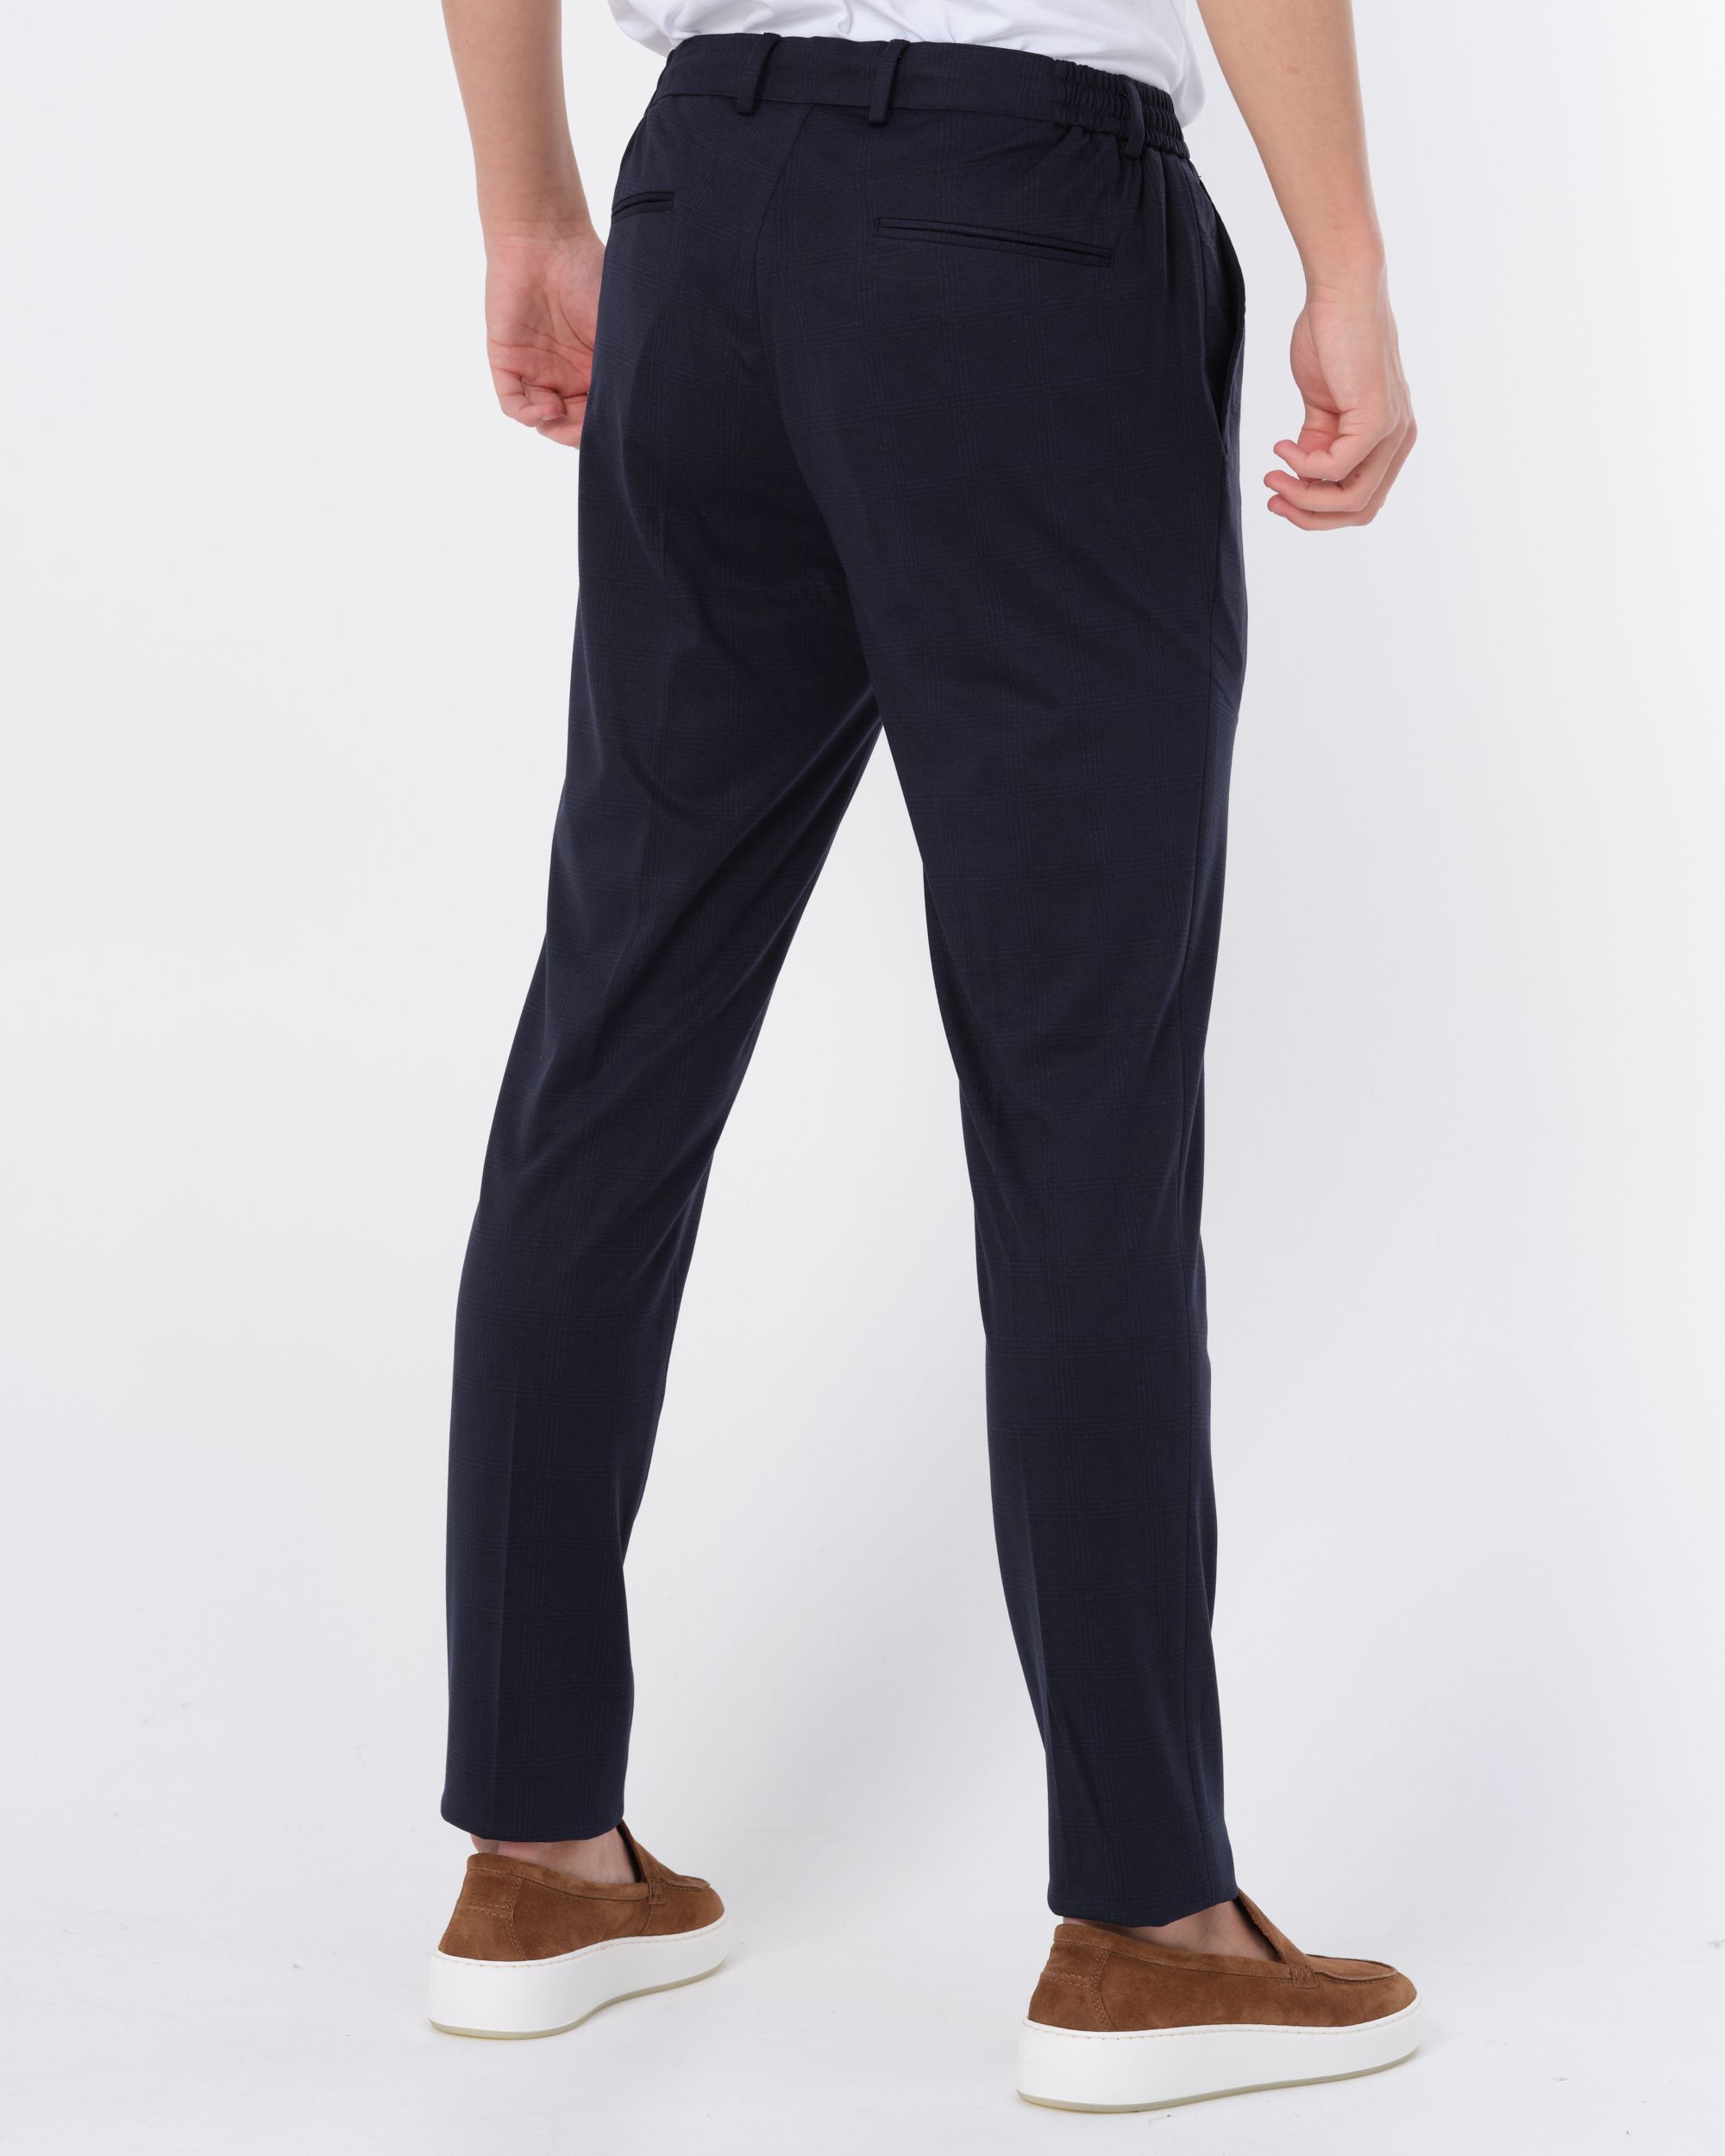 The BLUEPRINT Premium - Pantalon Donkerblauw uni 084021-001-46